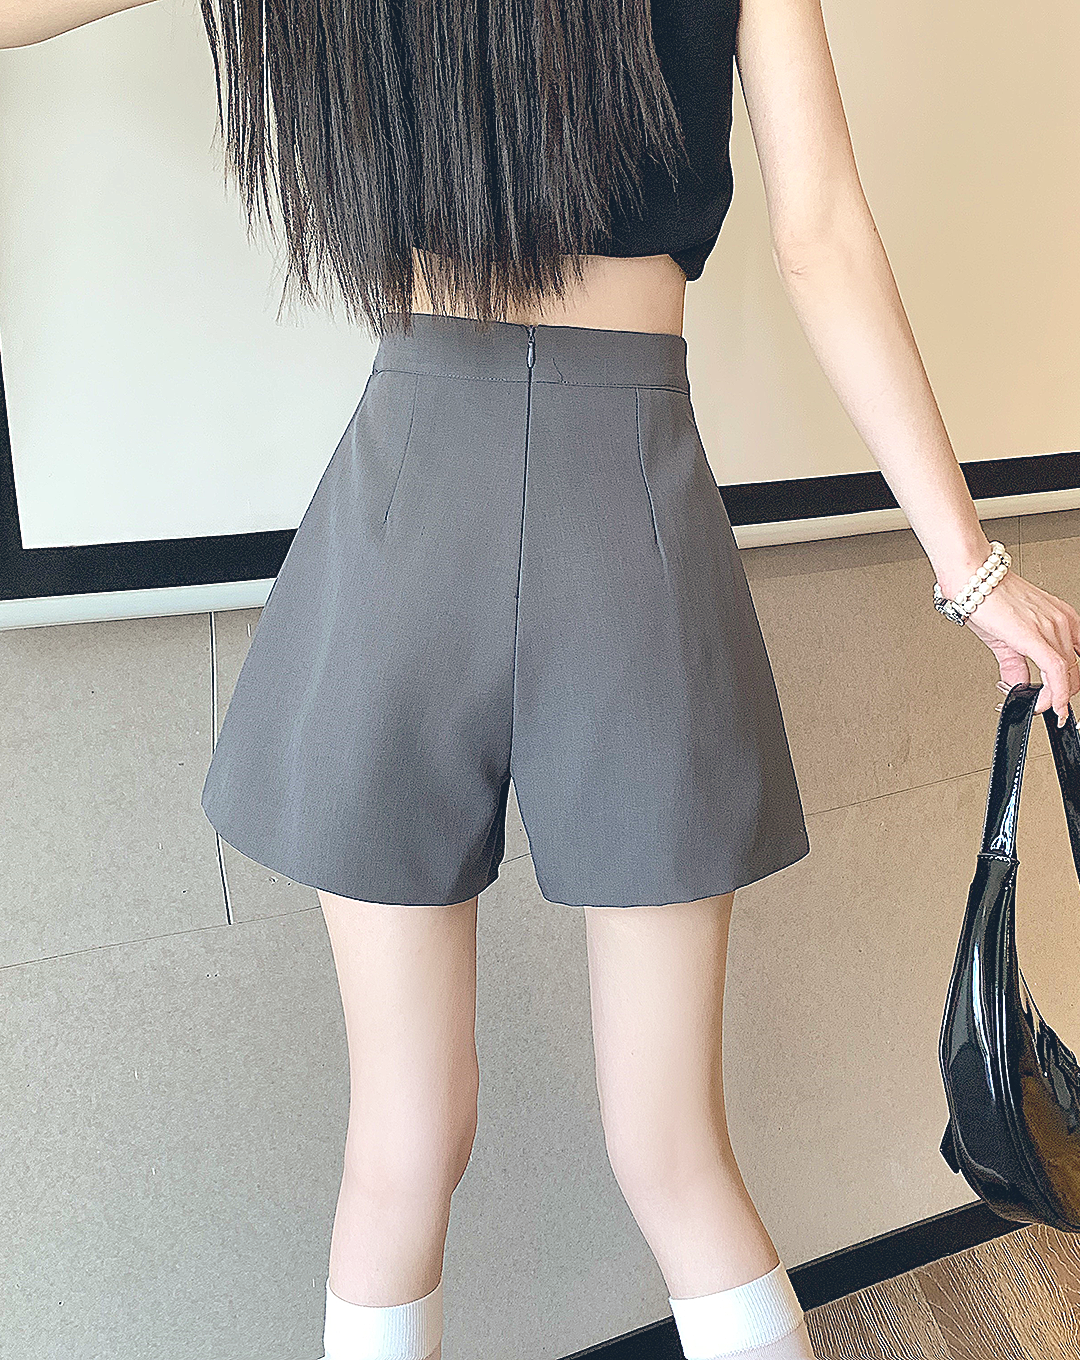 ♀V-line Culottes Skirt